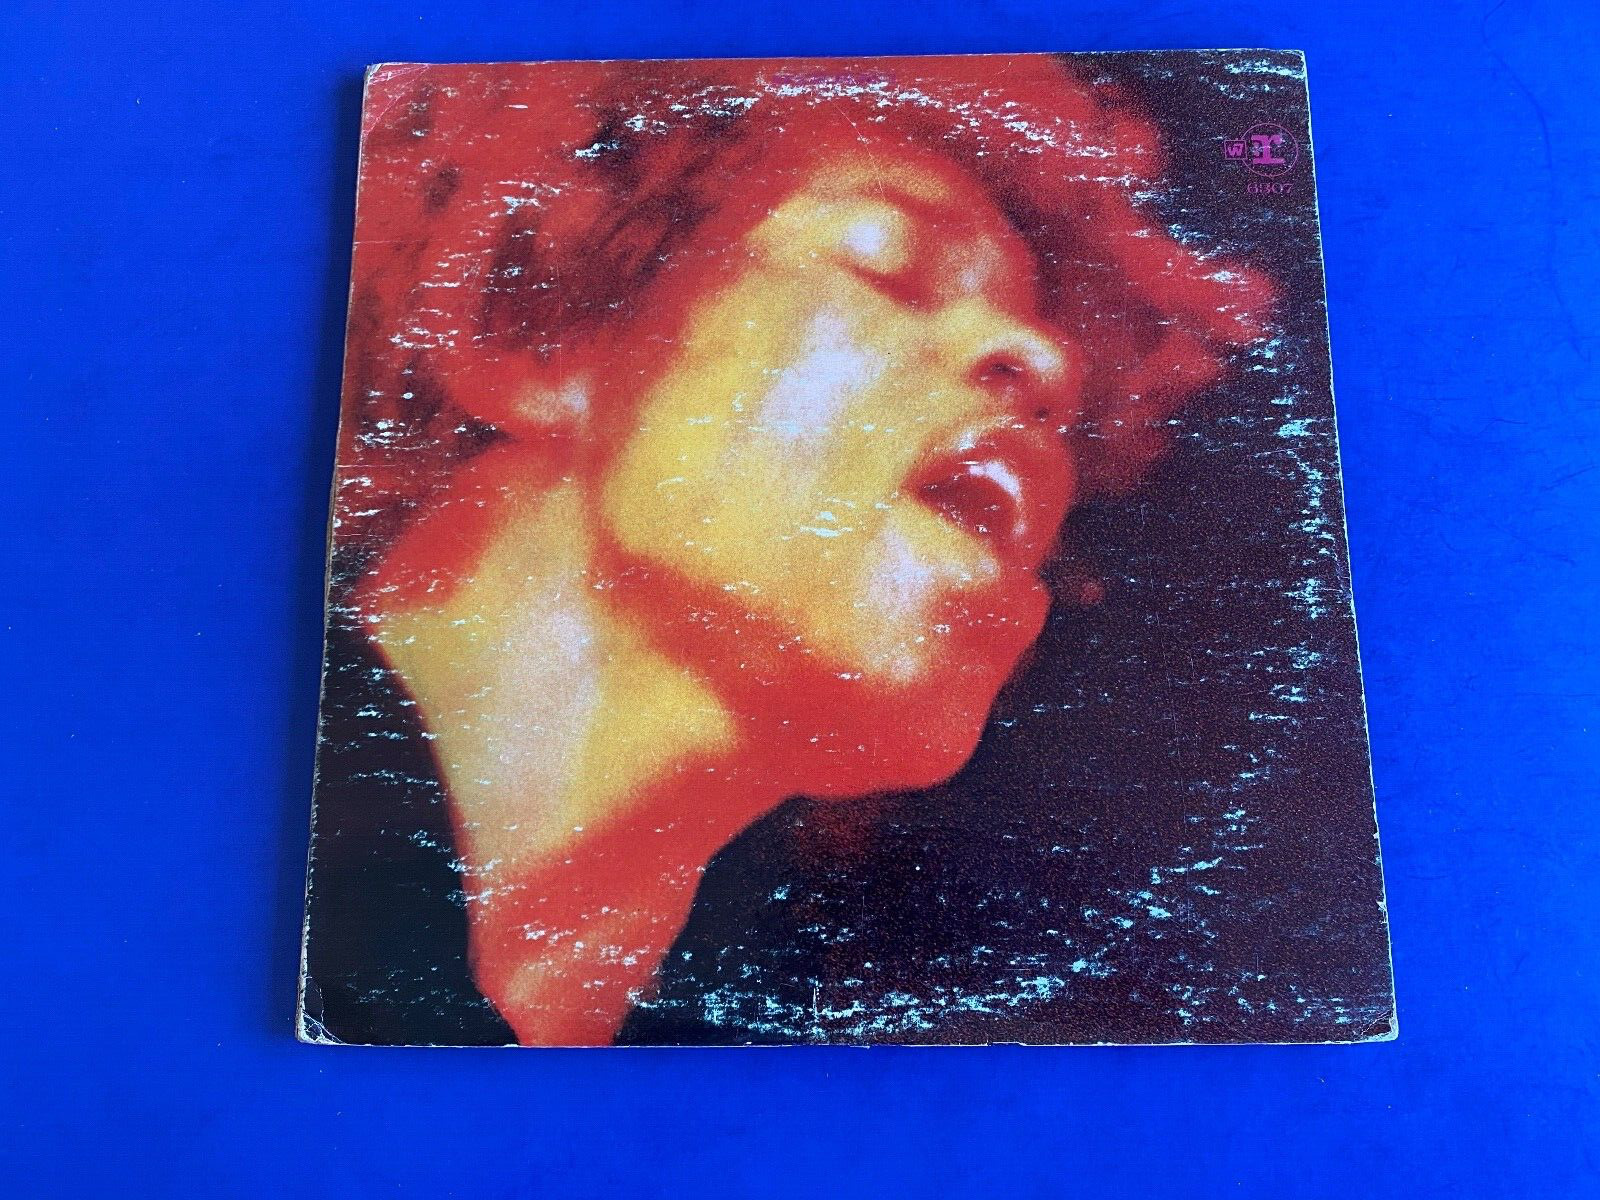 ORIGINAL Jimi Hendrix Electric Ladyland 2x LP 1968 Reprise 6307 tested VG+/G